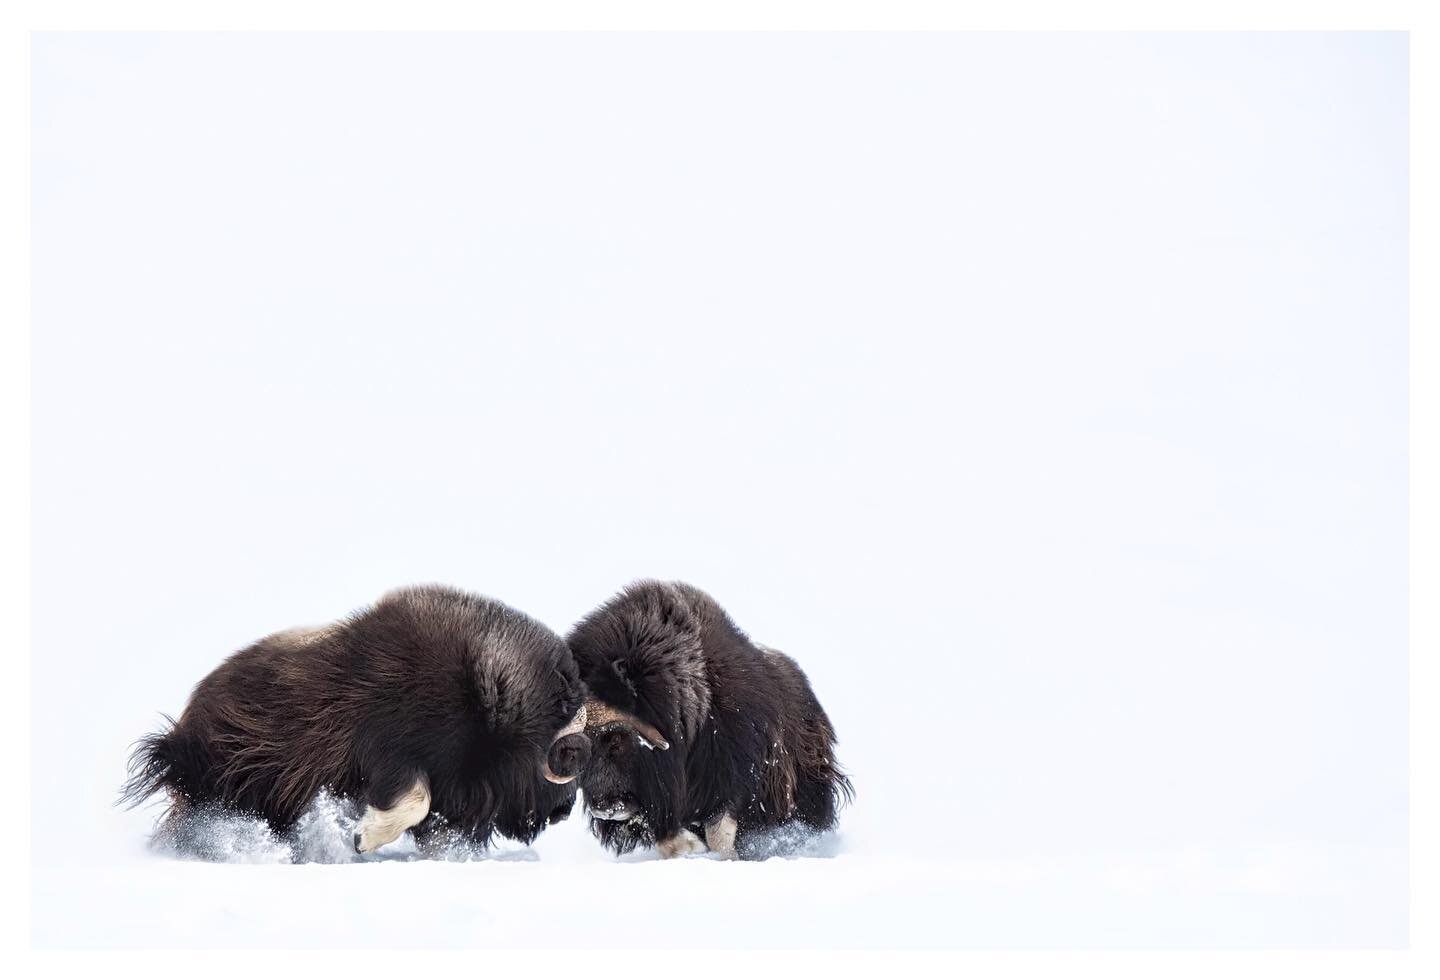 Musk ox throwing their weight around. #muskox #muskoxen #arctic #norwaynature #norgefoto #bns_norway #arcticnorway #dovrefjell #animalelite #wildlifephotos #wildlifeperfection #ig_discover_wildlife #mammalsofinstagram #igwildlife #creative_wildlife #